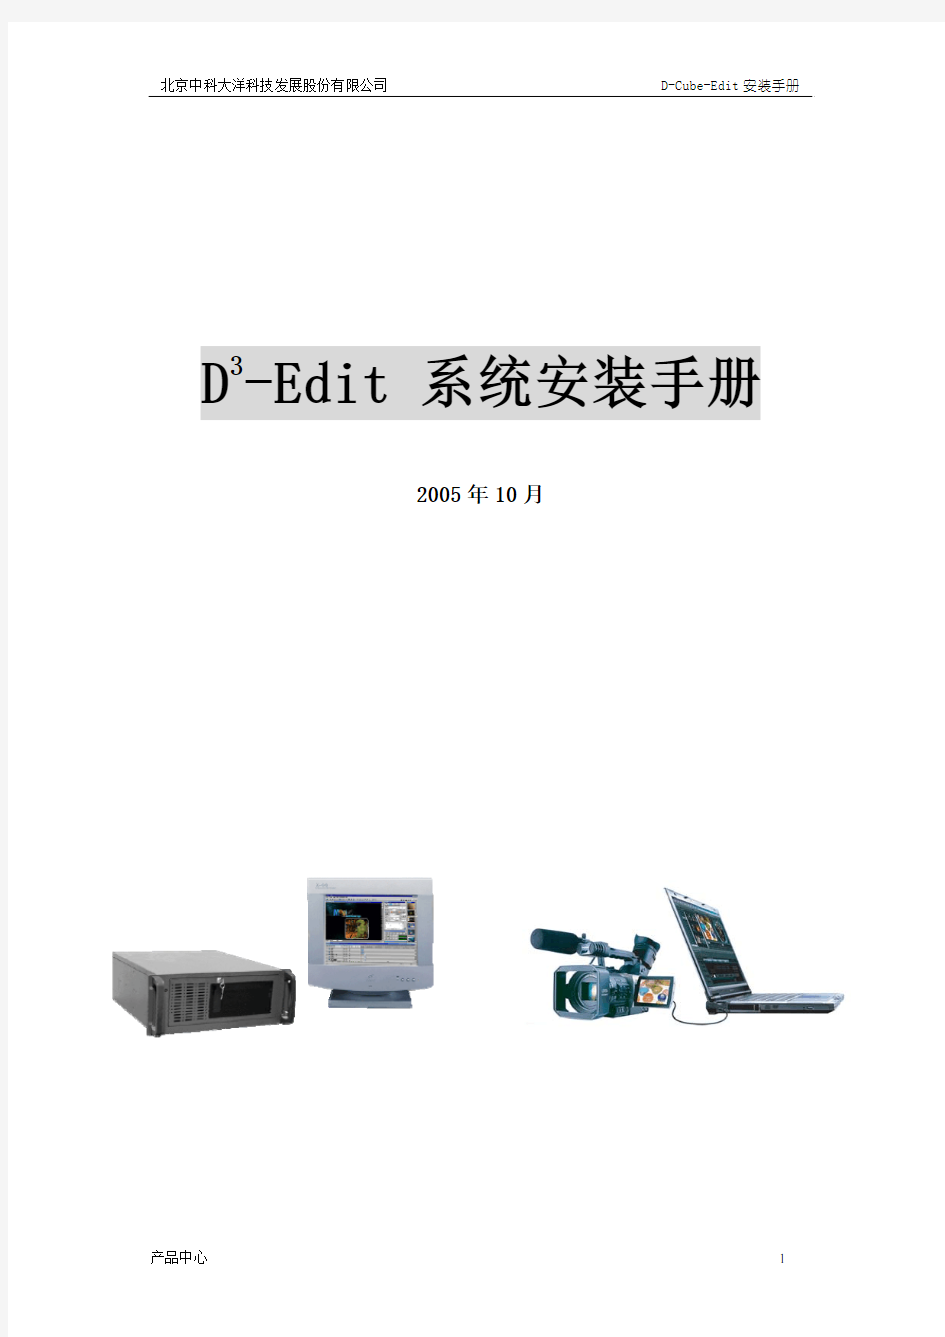 D-Cube-Edit_系统安装手册